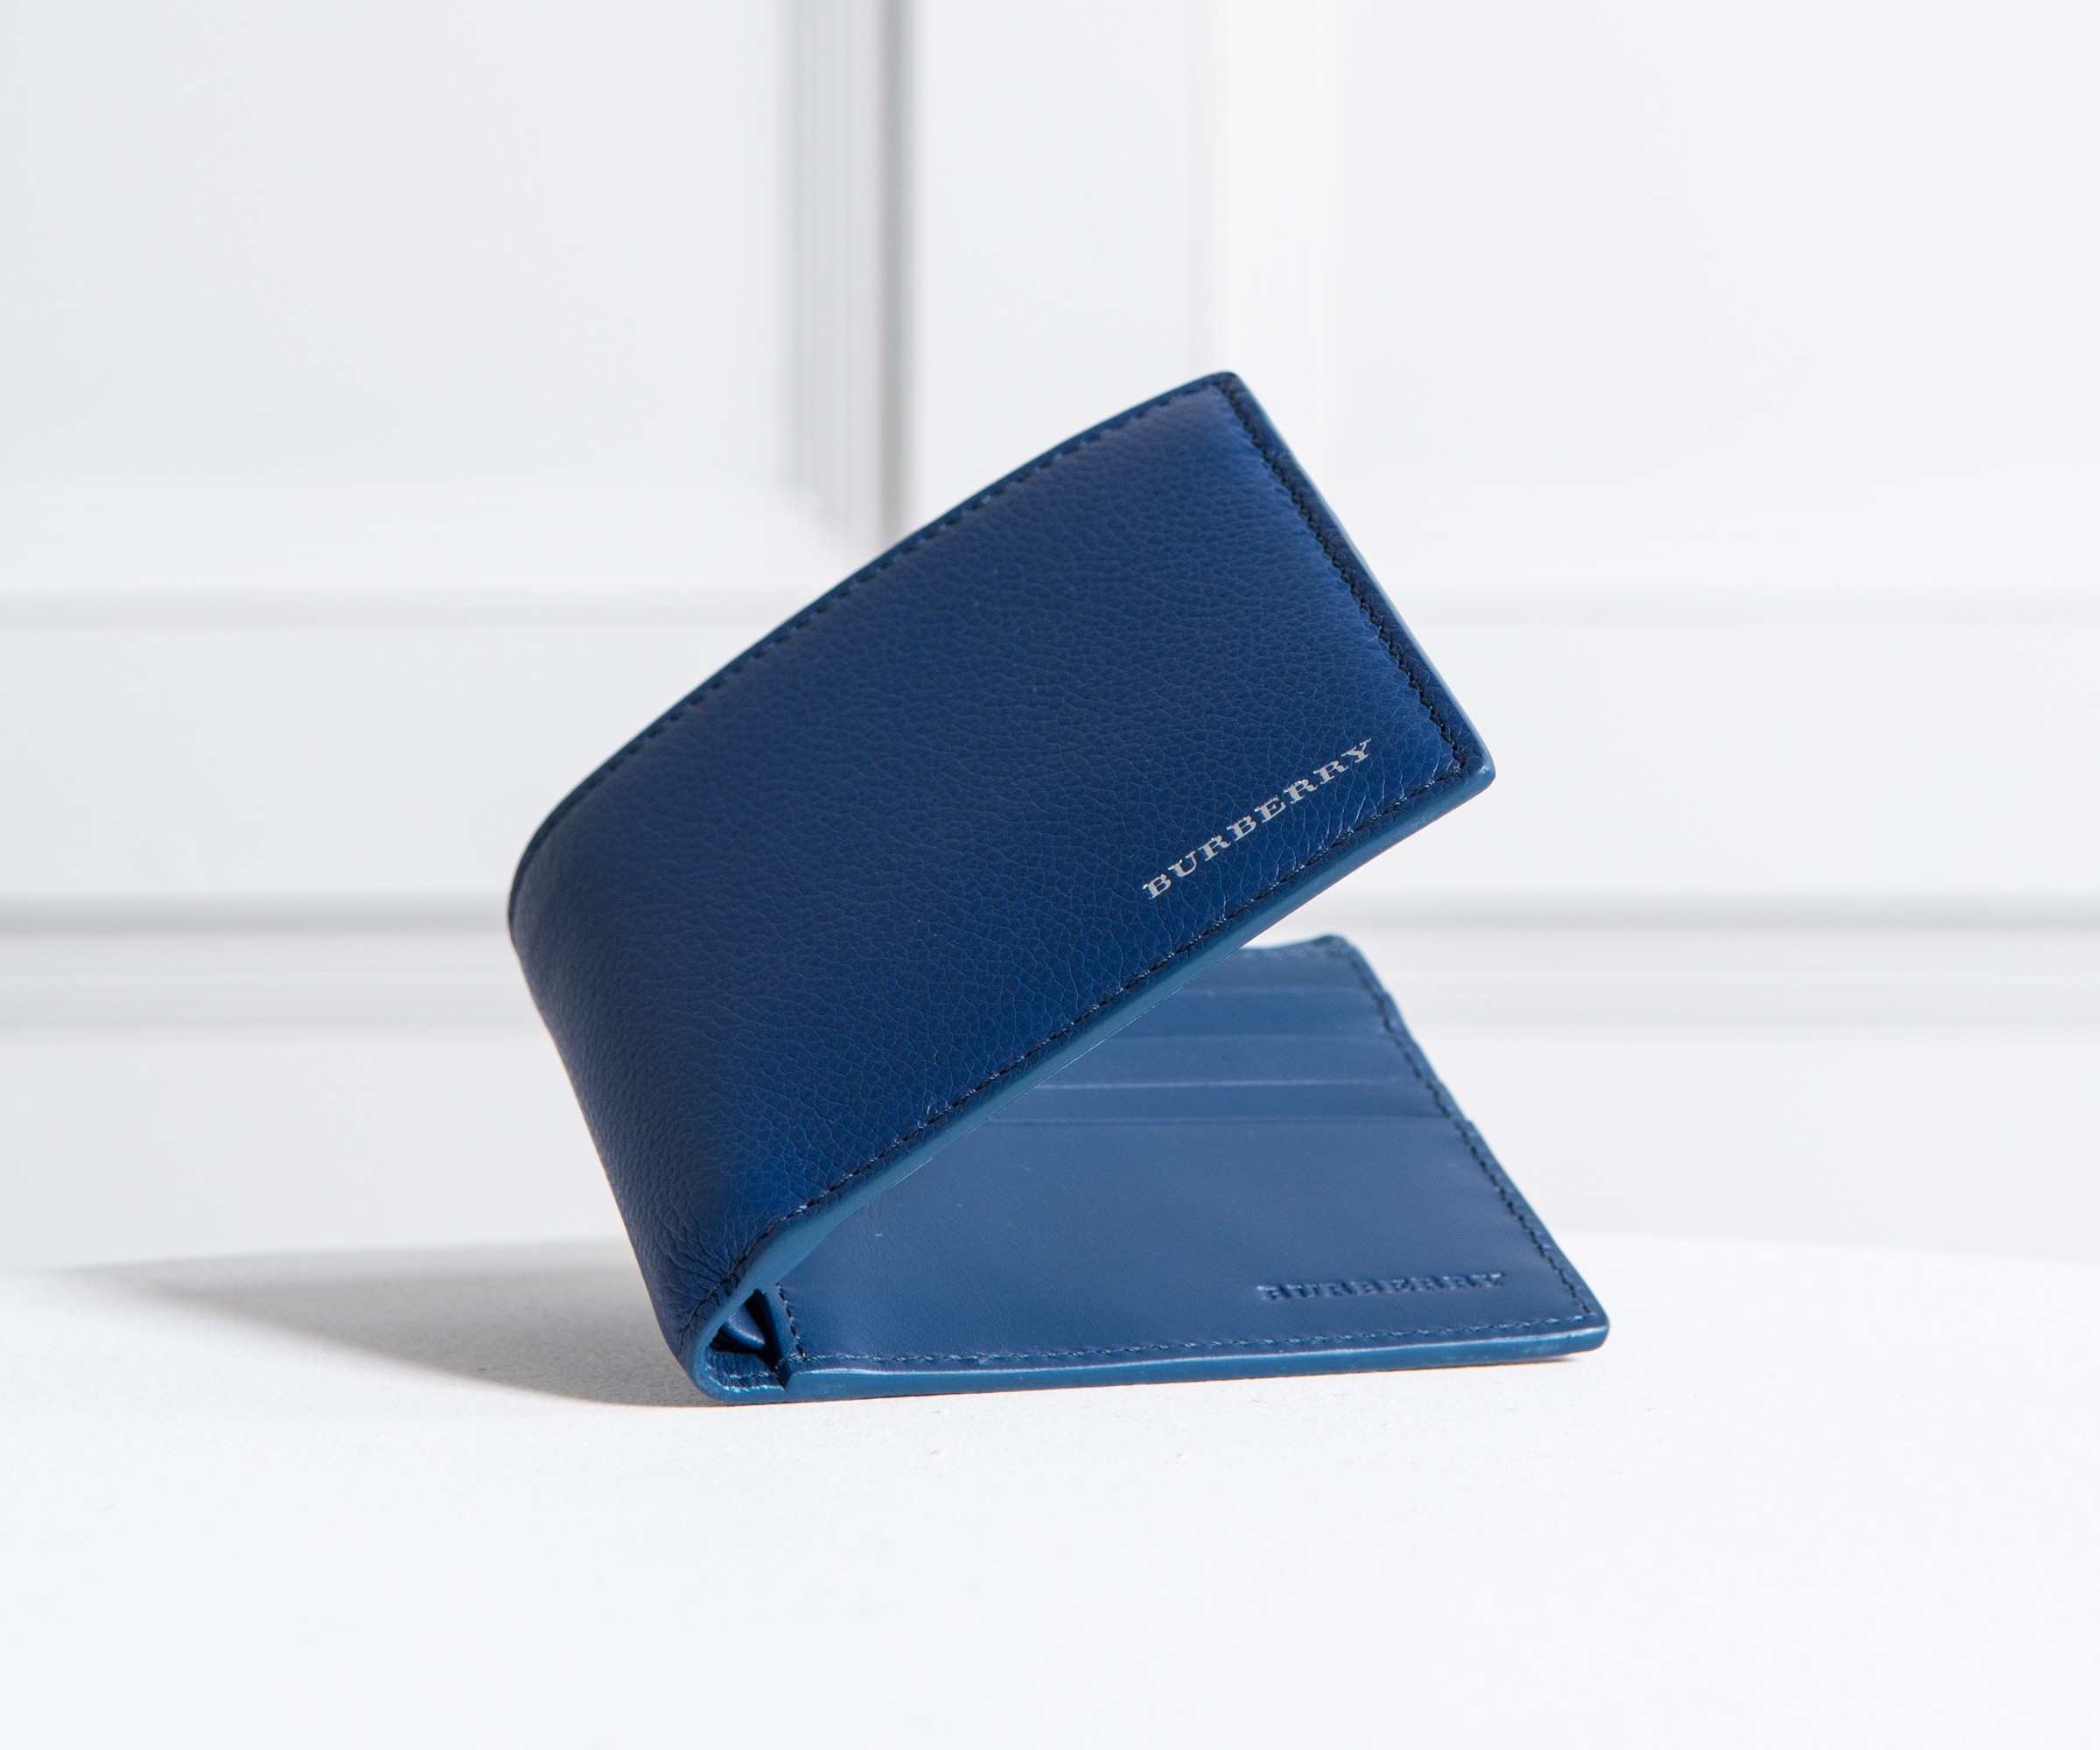 Burberry Folding Wallet in Blue for Men